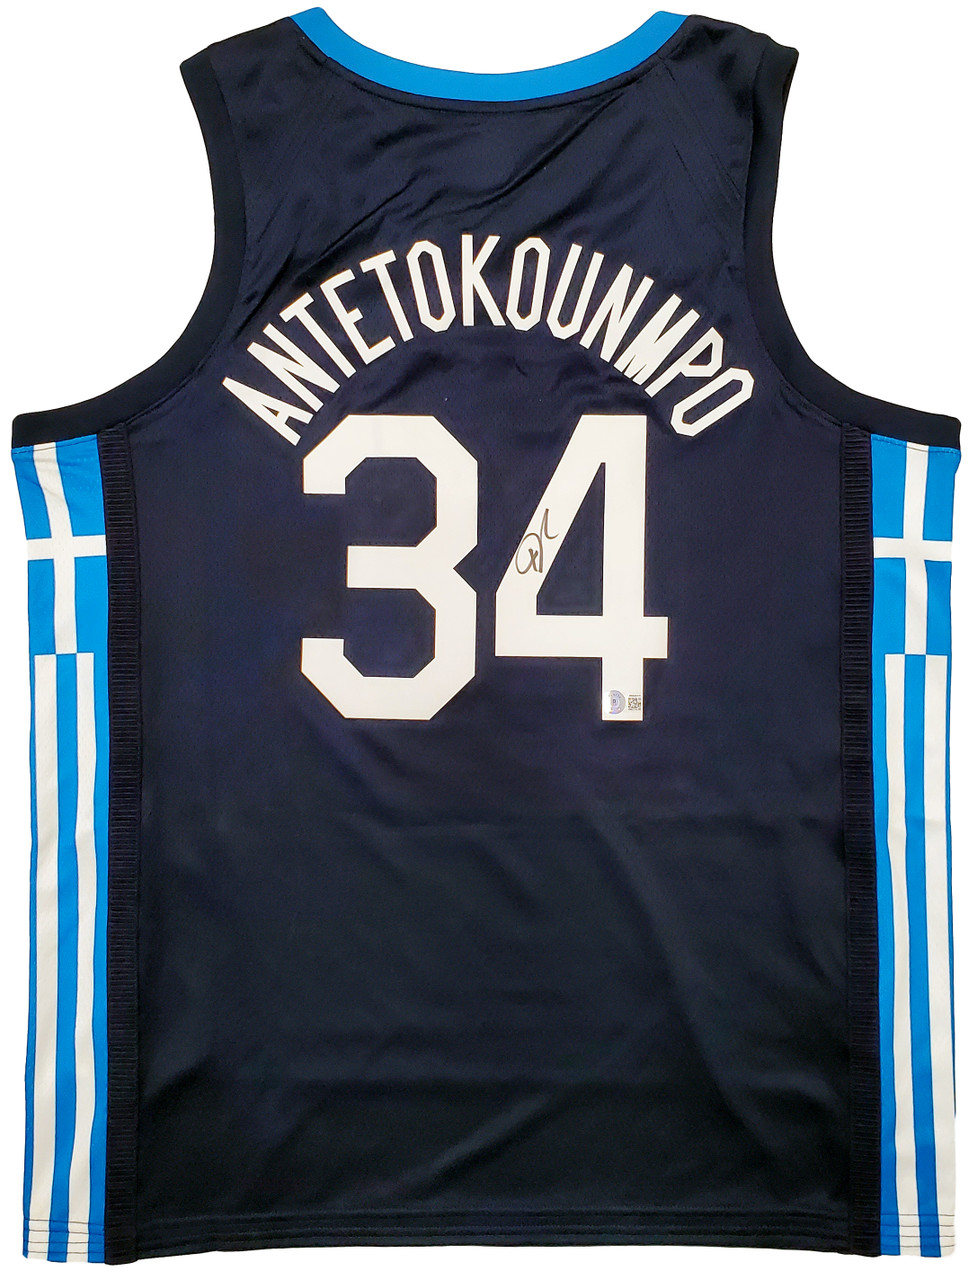 Team Greece Giannis Antetokounmpo Autographed Blue Nike Jersey XL BAS QR Stock #197443 - Mill Creek Sports